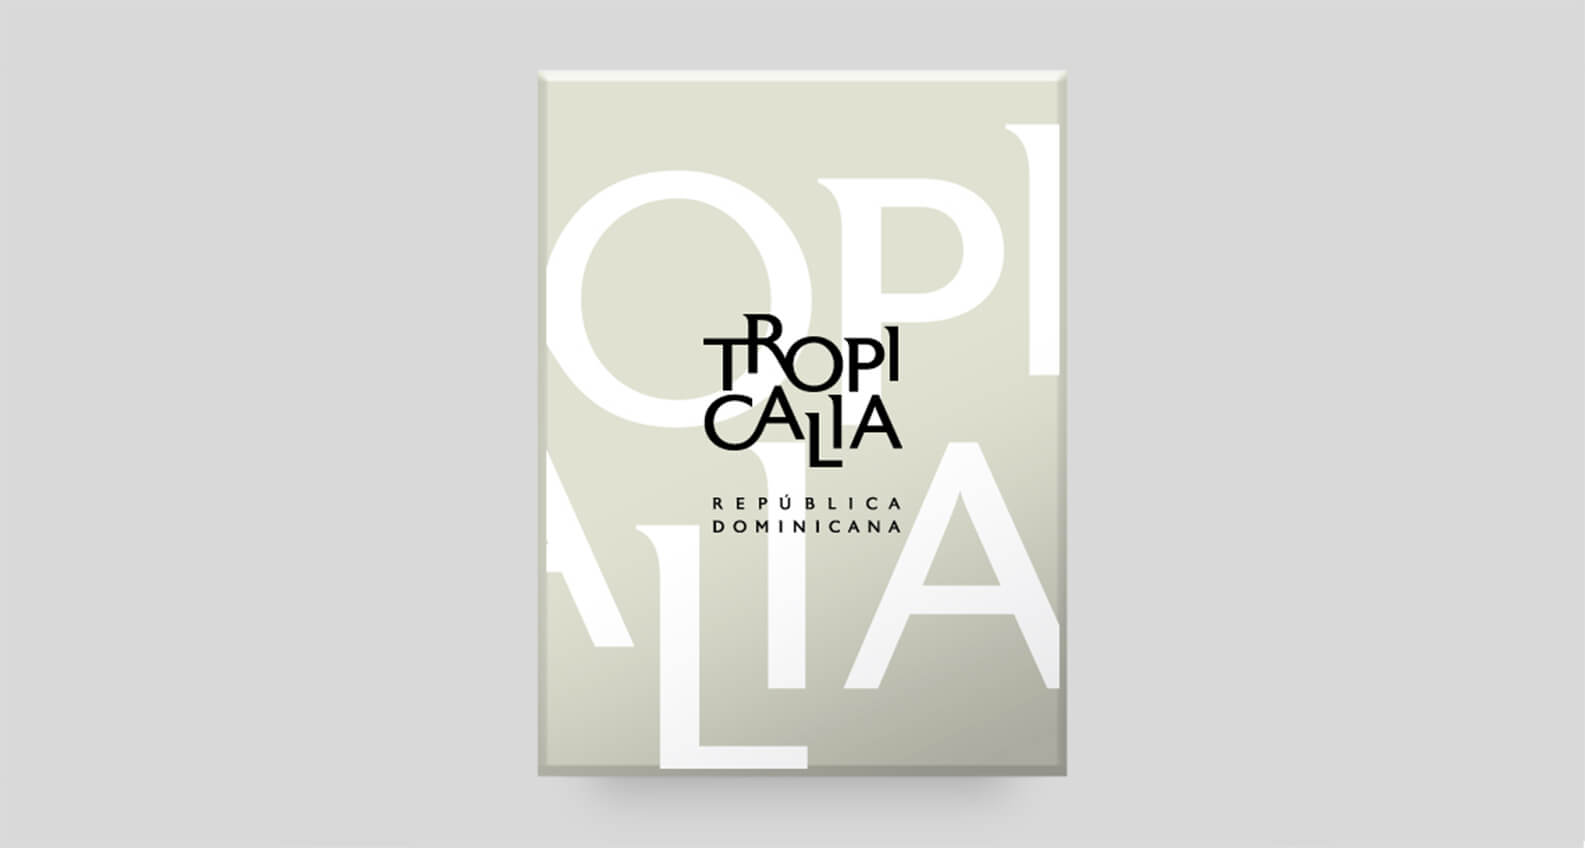 Tropicalia book cover design by Jacober Creative